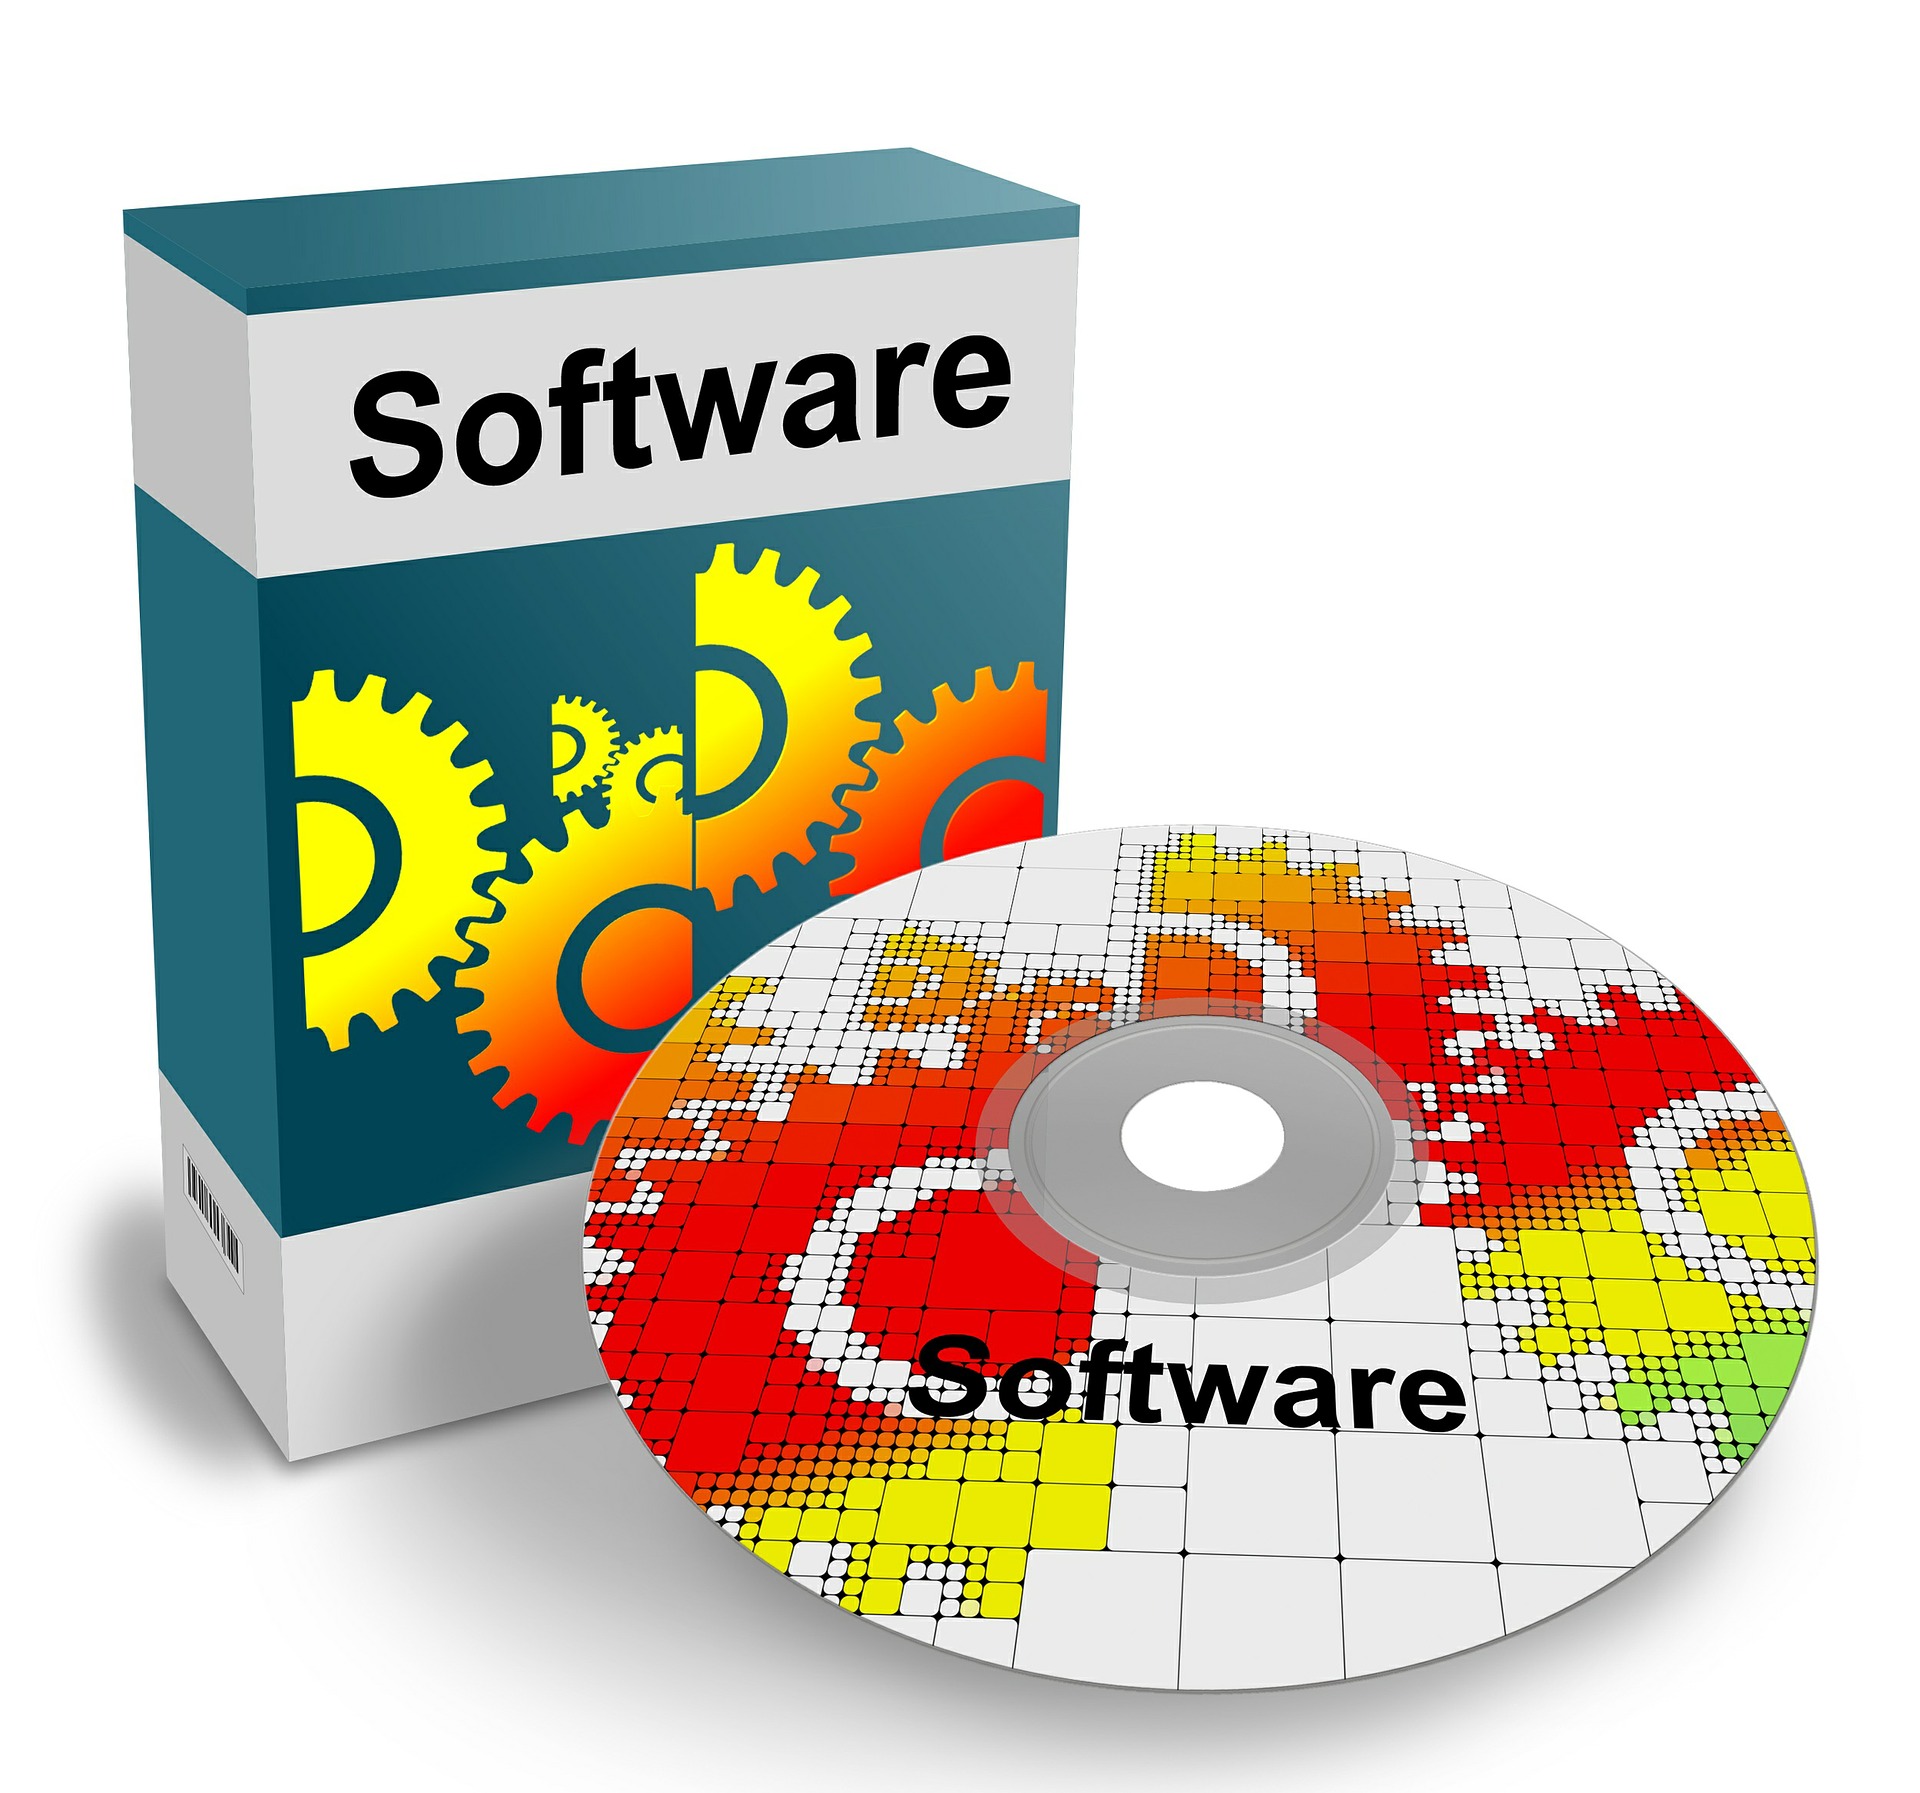 Supply- Design software